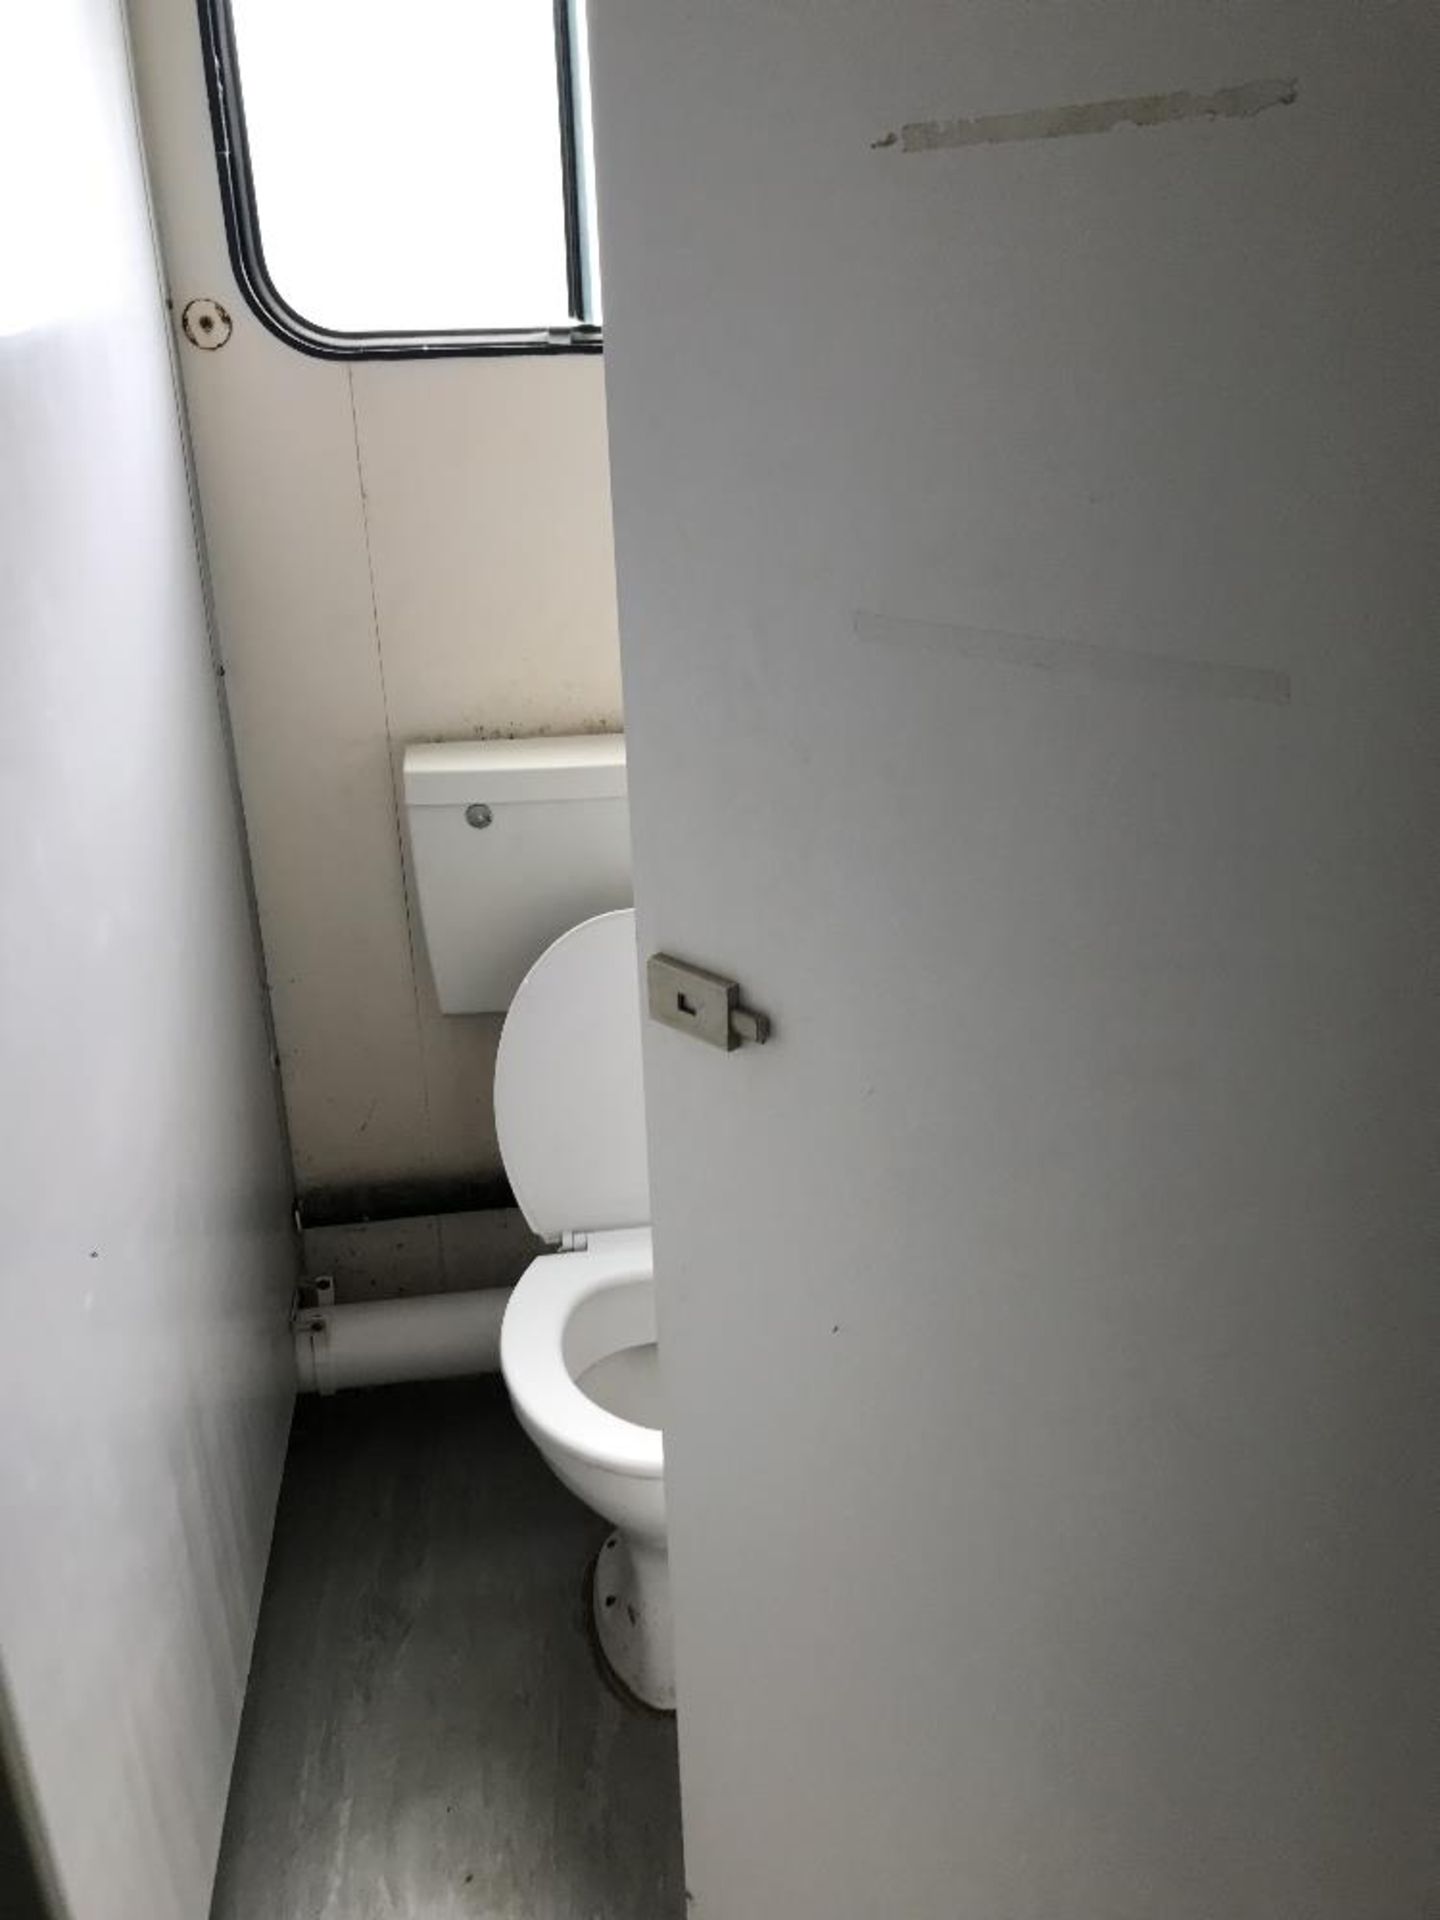 Portacabin jack legged staff toilet unit - Bild 7 aus 12